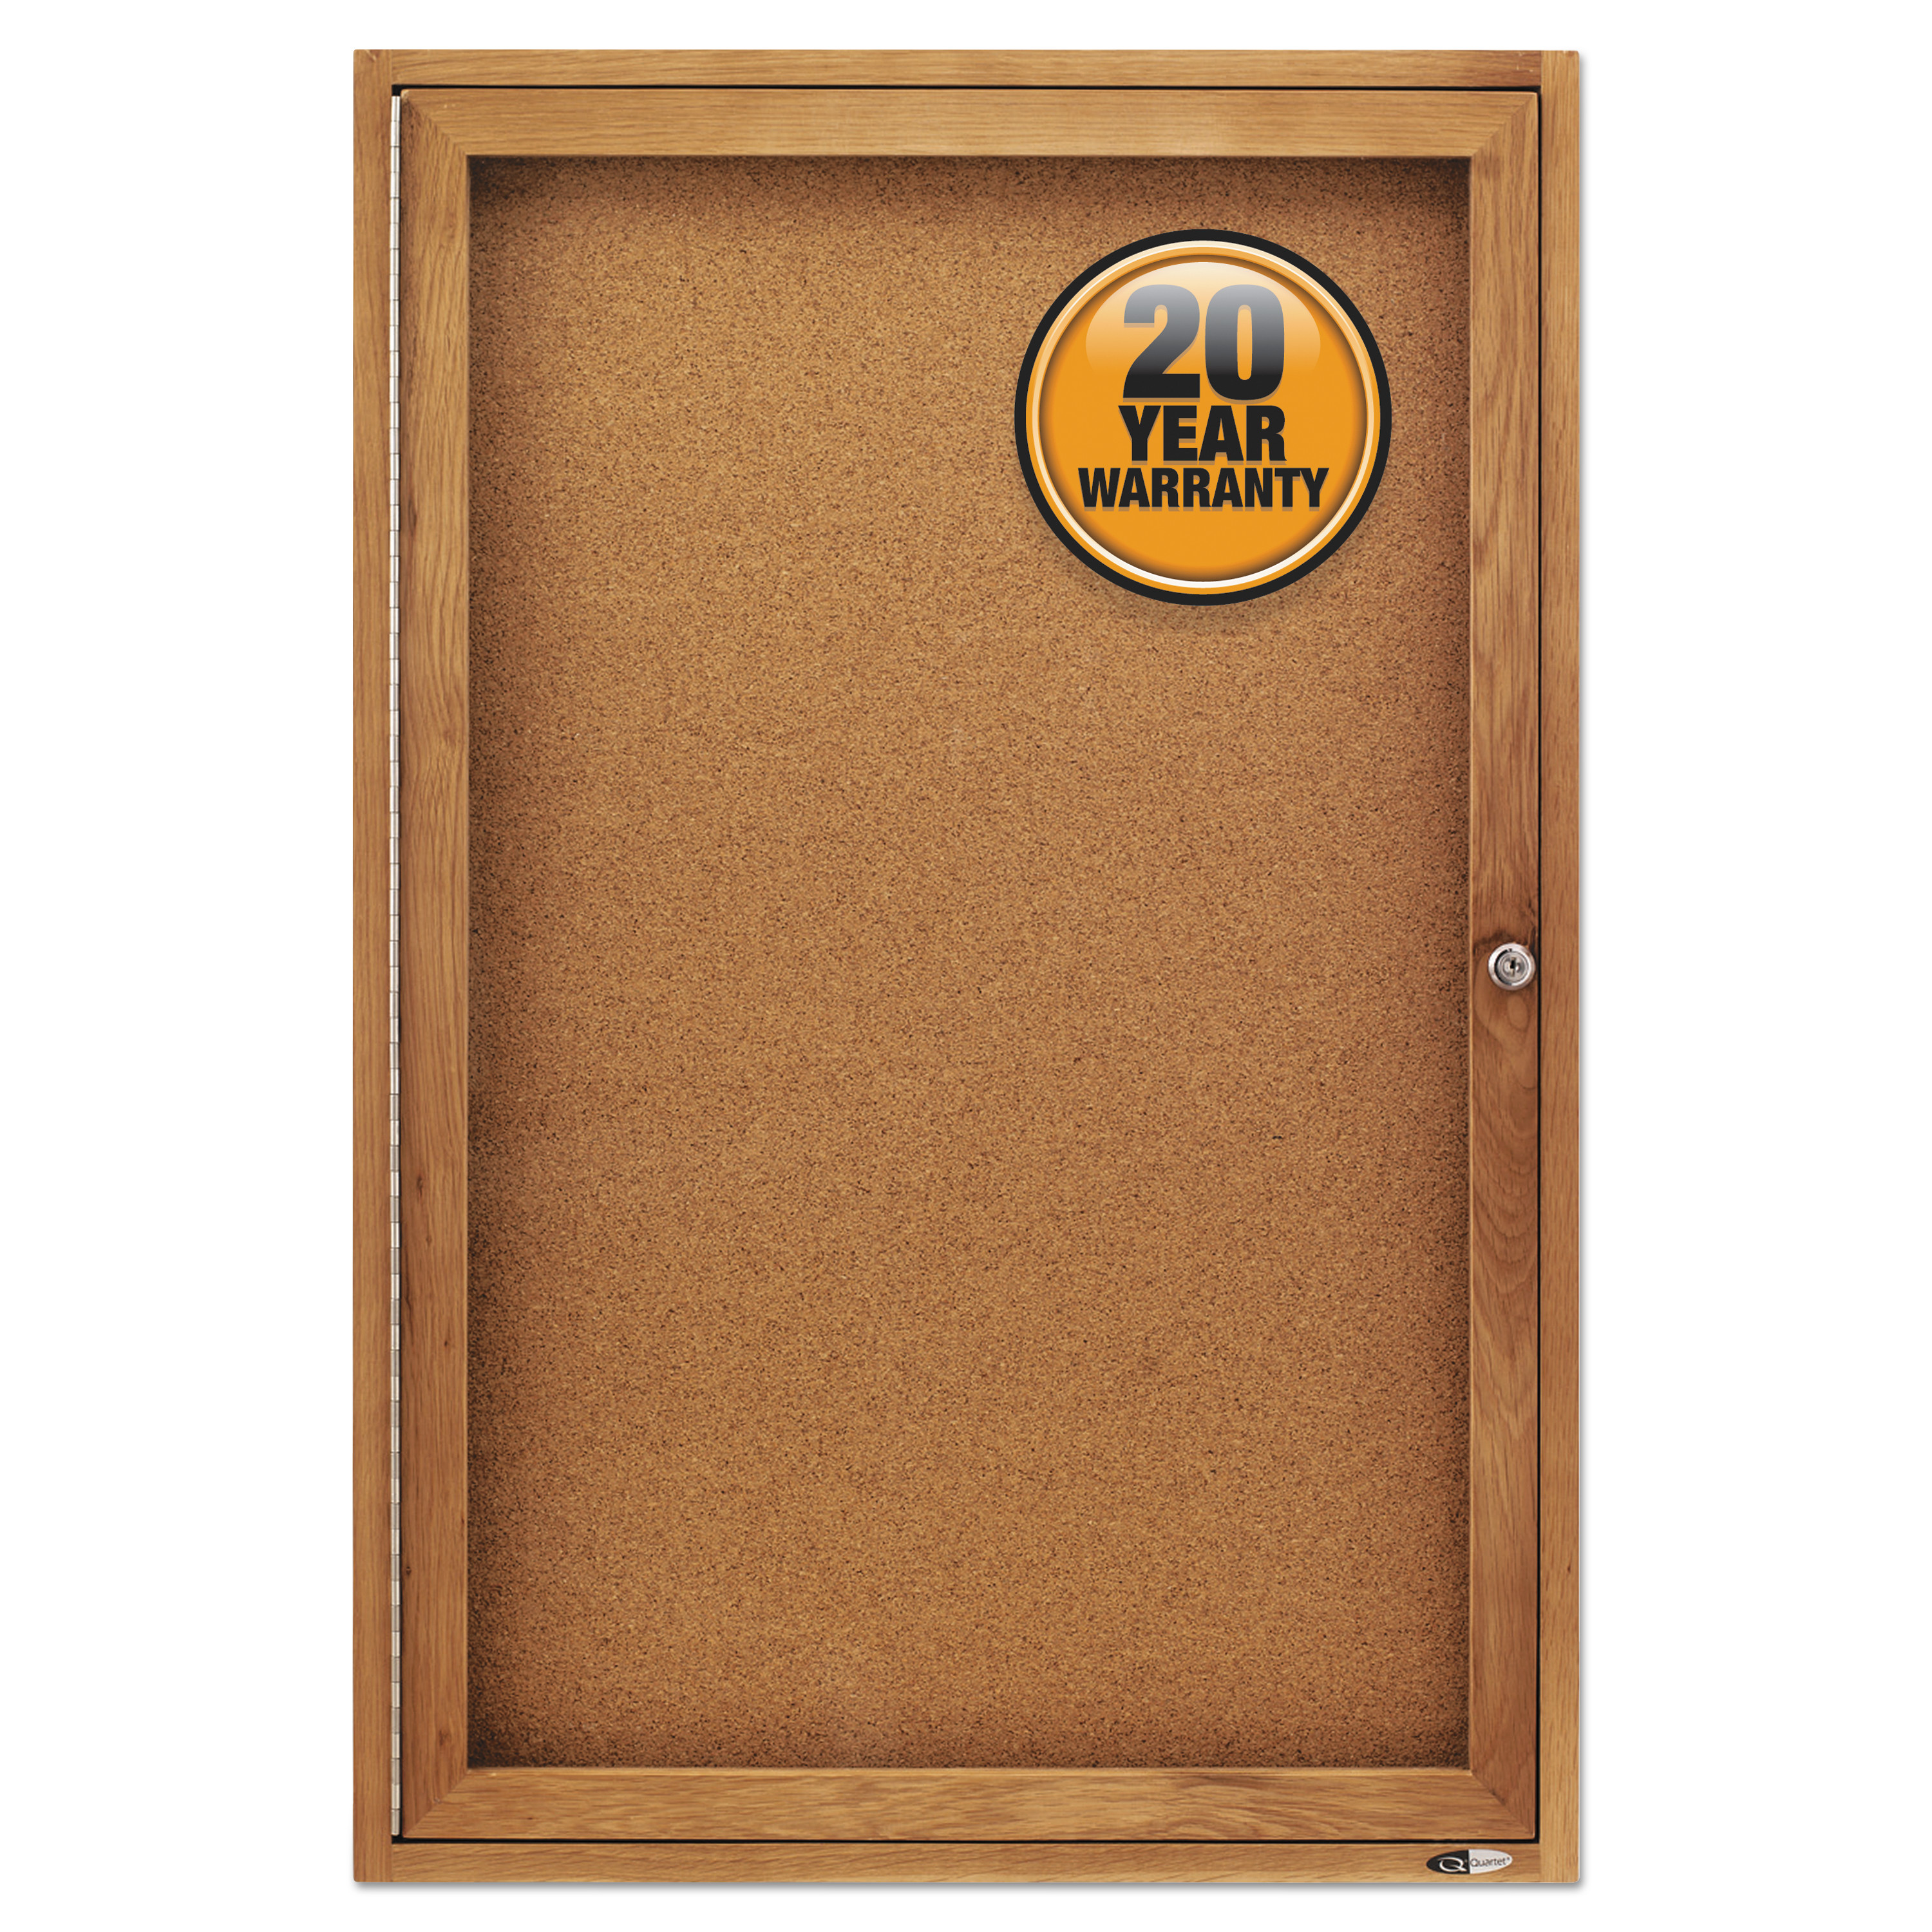  Quartet 363 Enclosed Bulletin Board, Natural Cork/Fiberboard, 24 x 36, Oak Frame (QRT363) 